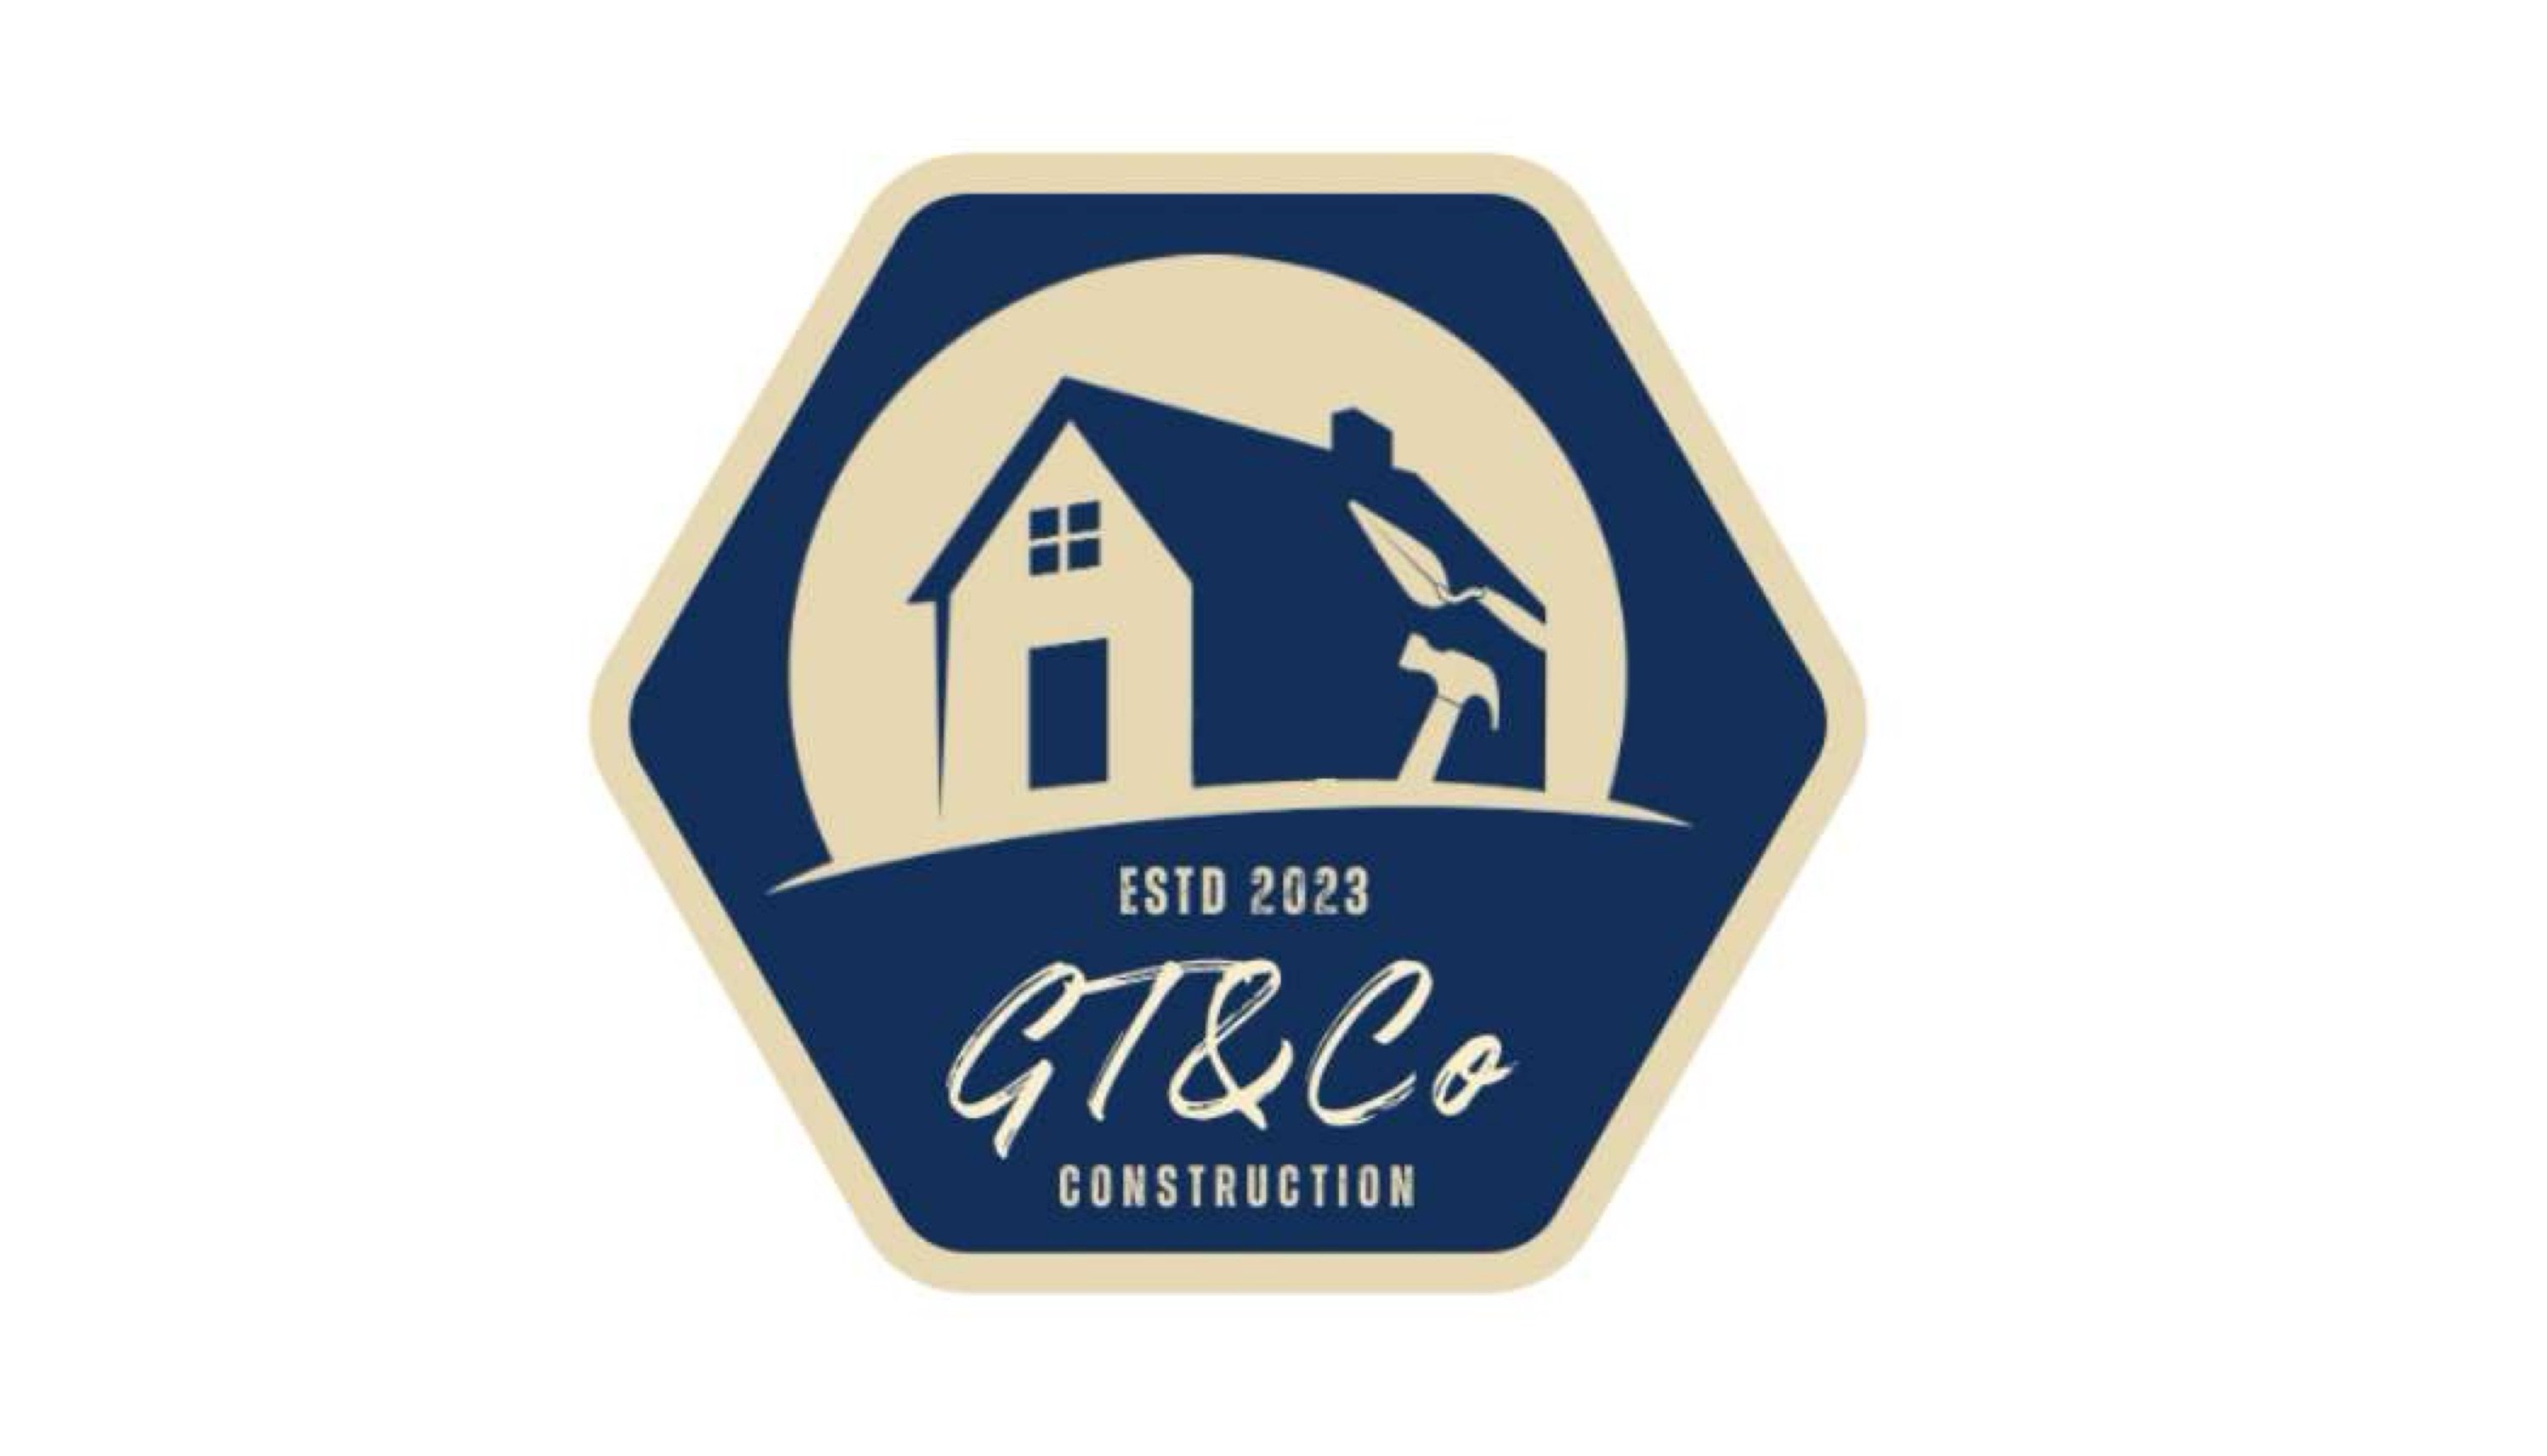 GT&CO CONSTRUCTION LLC Logo